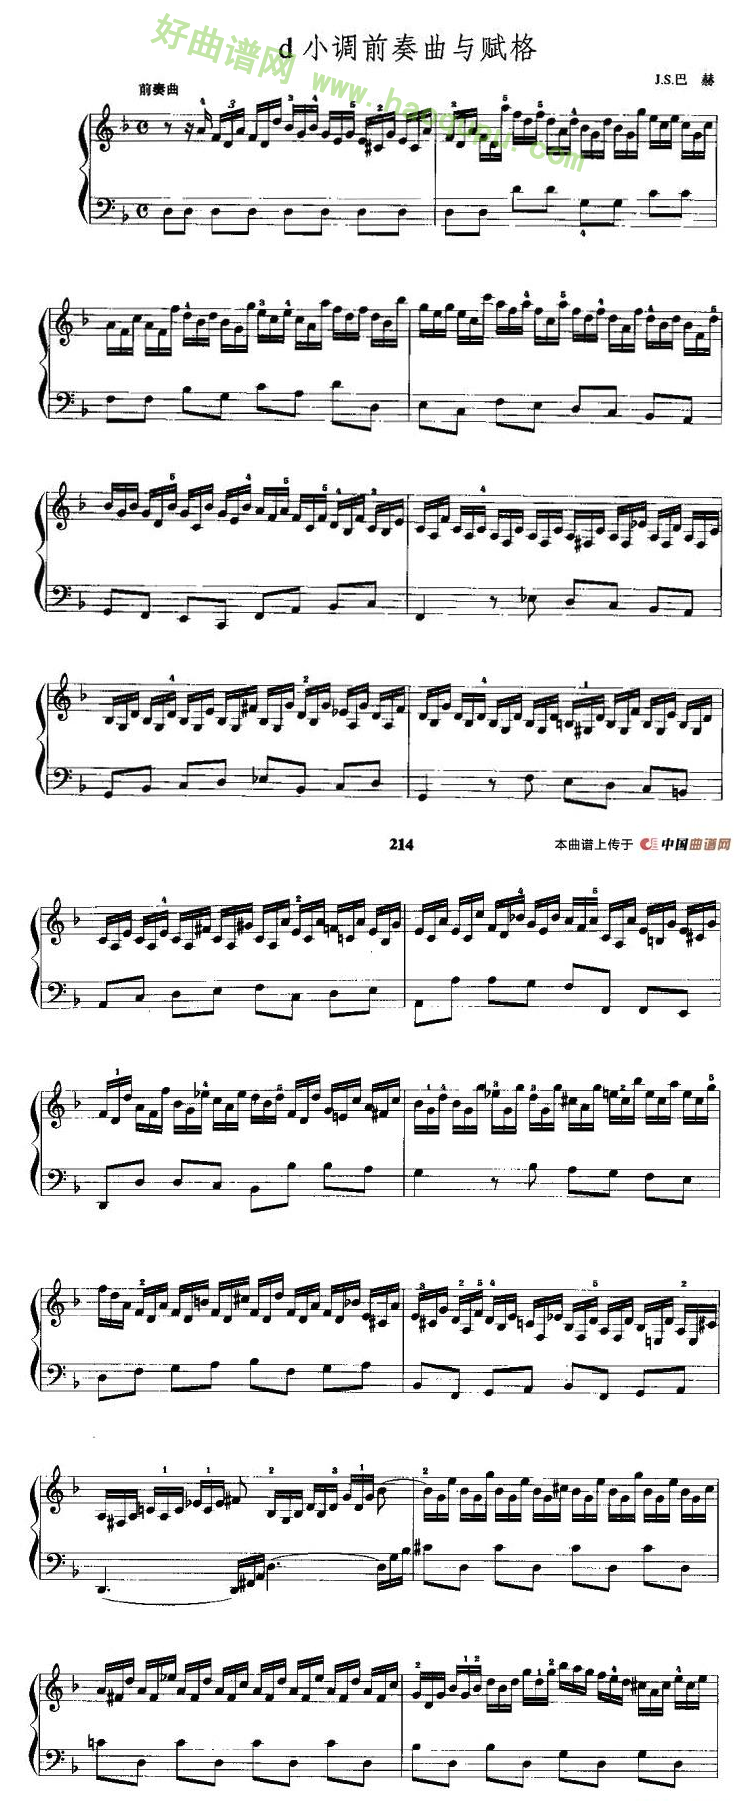 《d小调前奏曲与赋格》 手风琴曲谱第1张